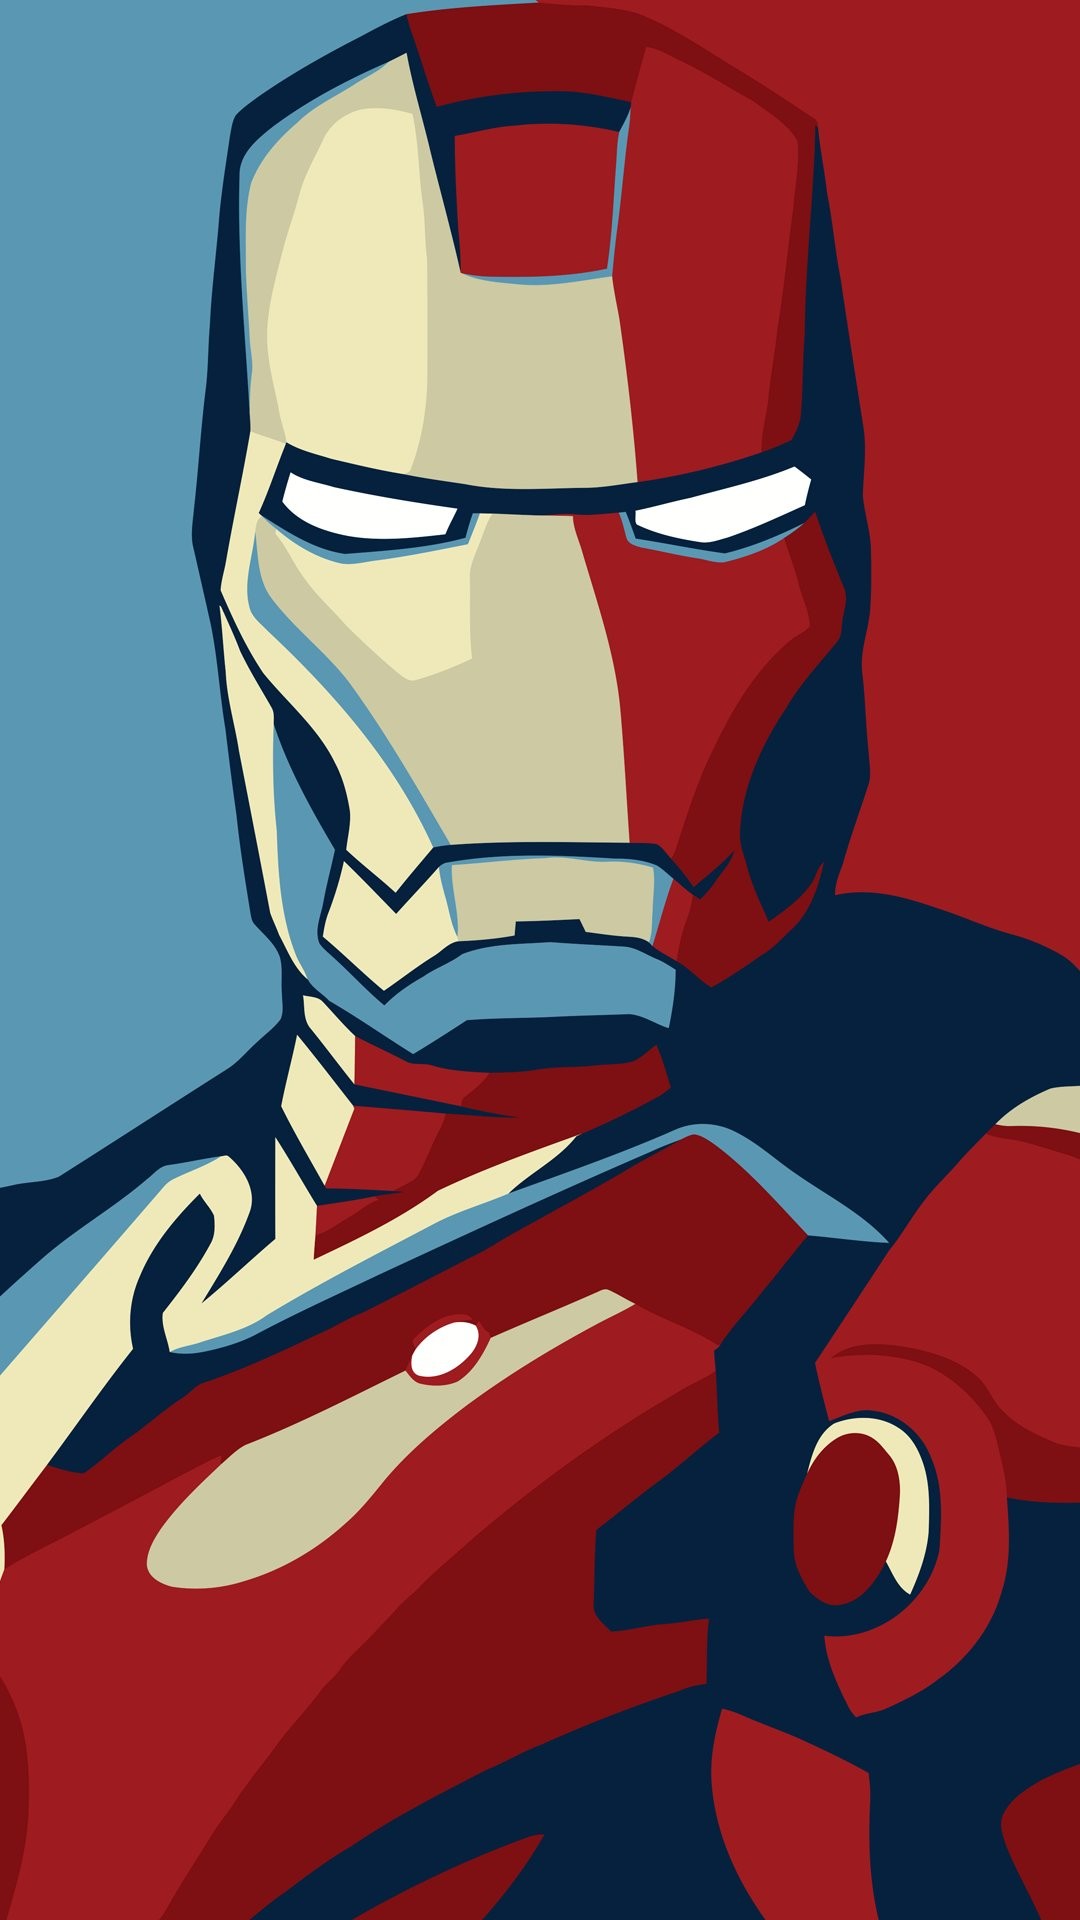 Iron Man Iphone Wallpaper #ironmaniphonewallpaper